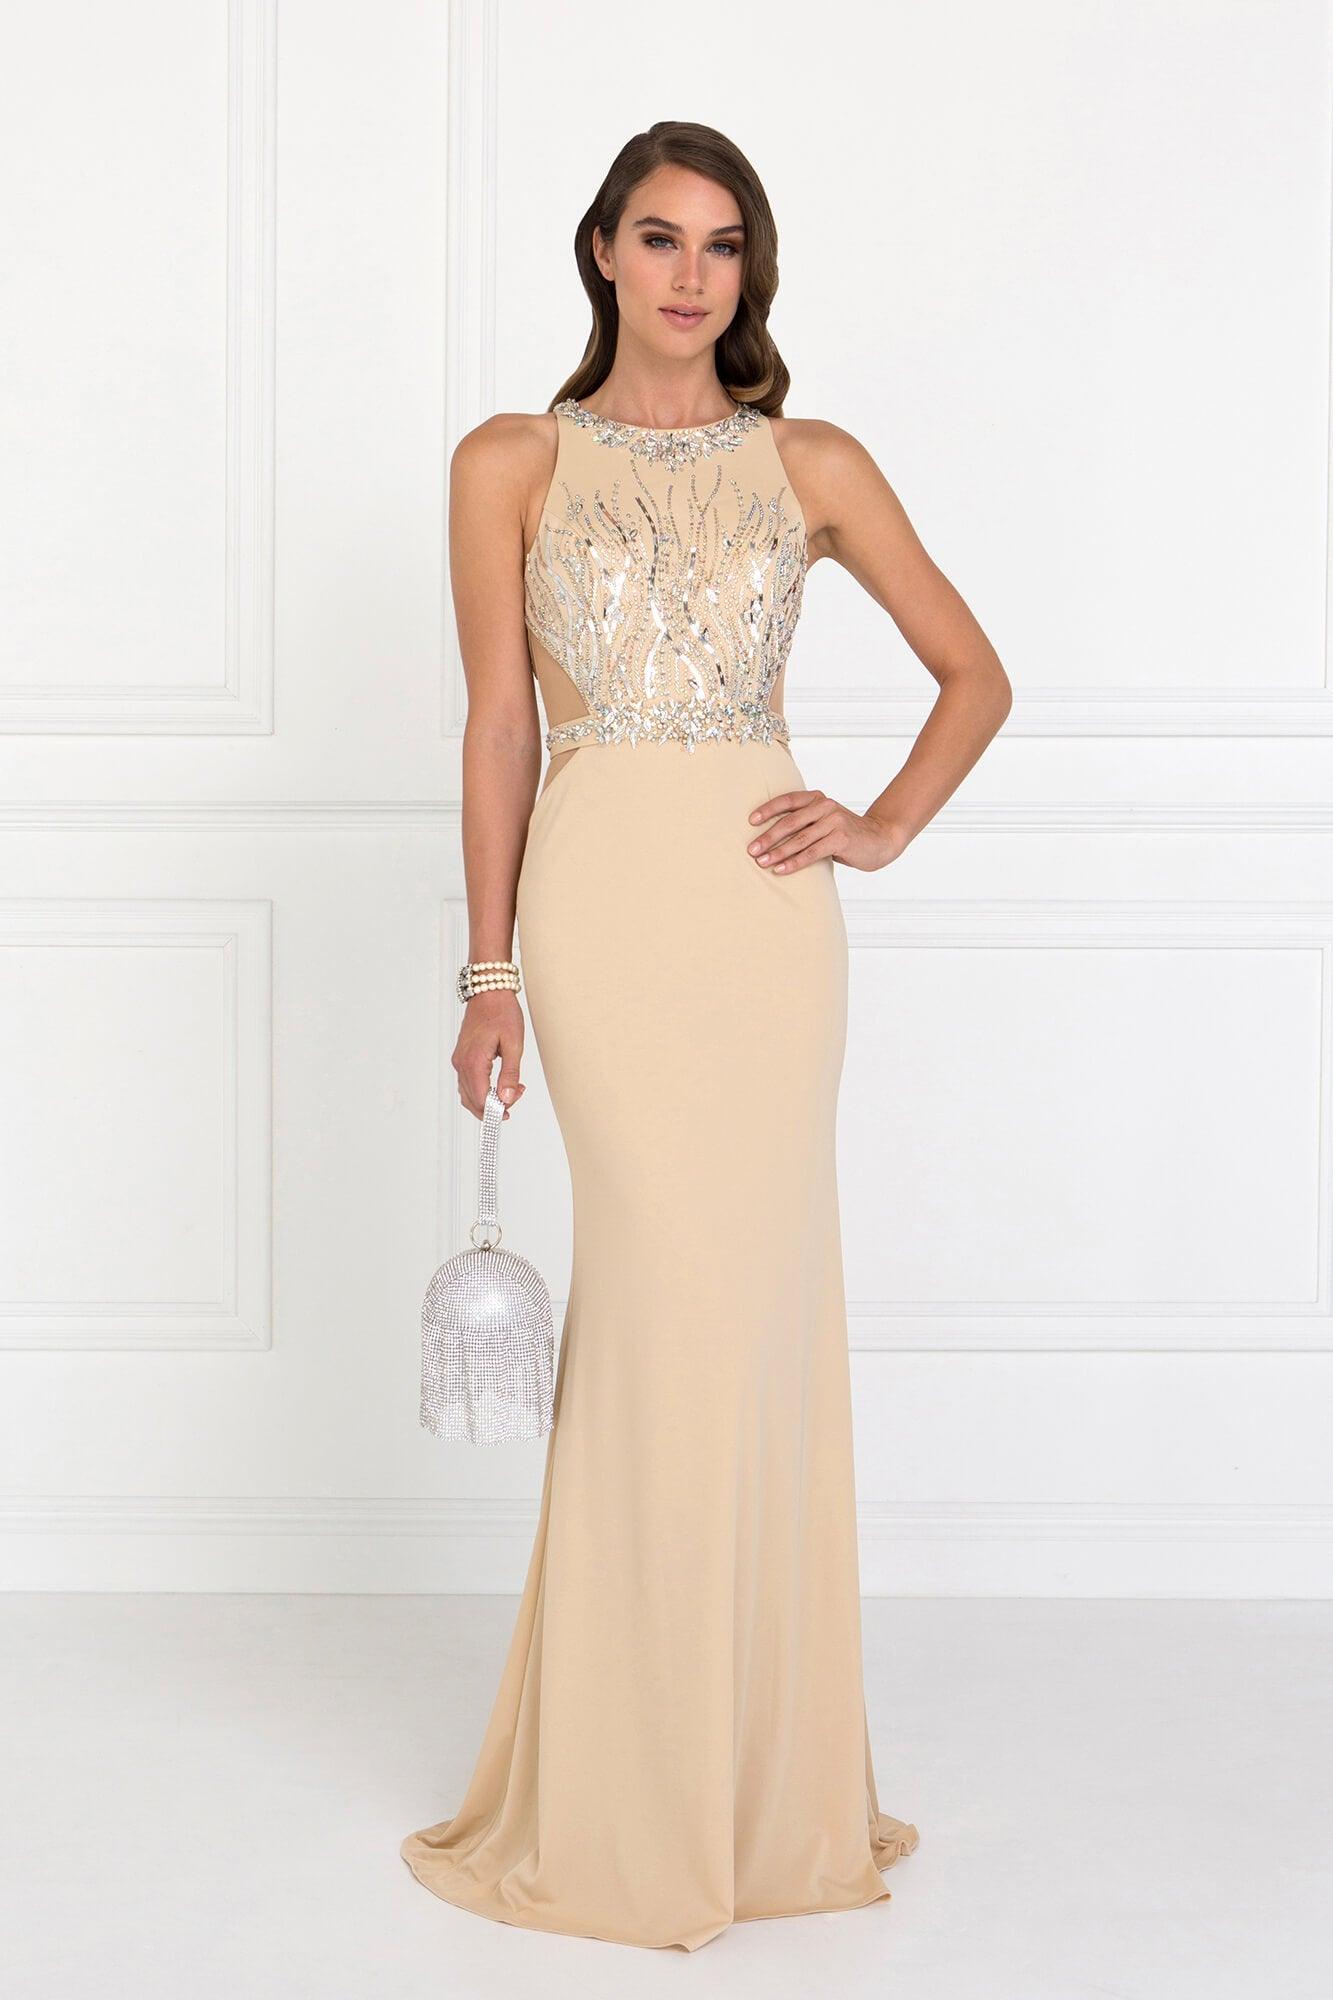 Prom Beaded Formal Dress Trumpet Gown - The Dress Outlet Elizabeth K